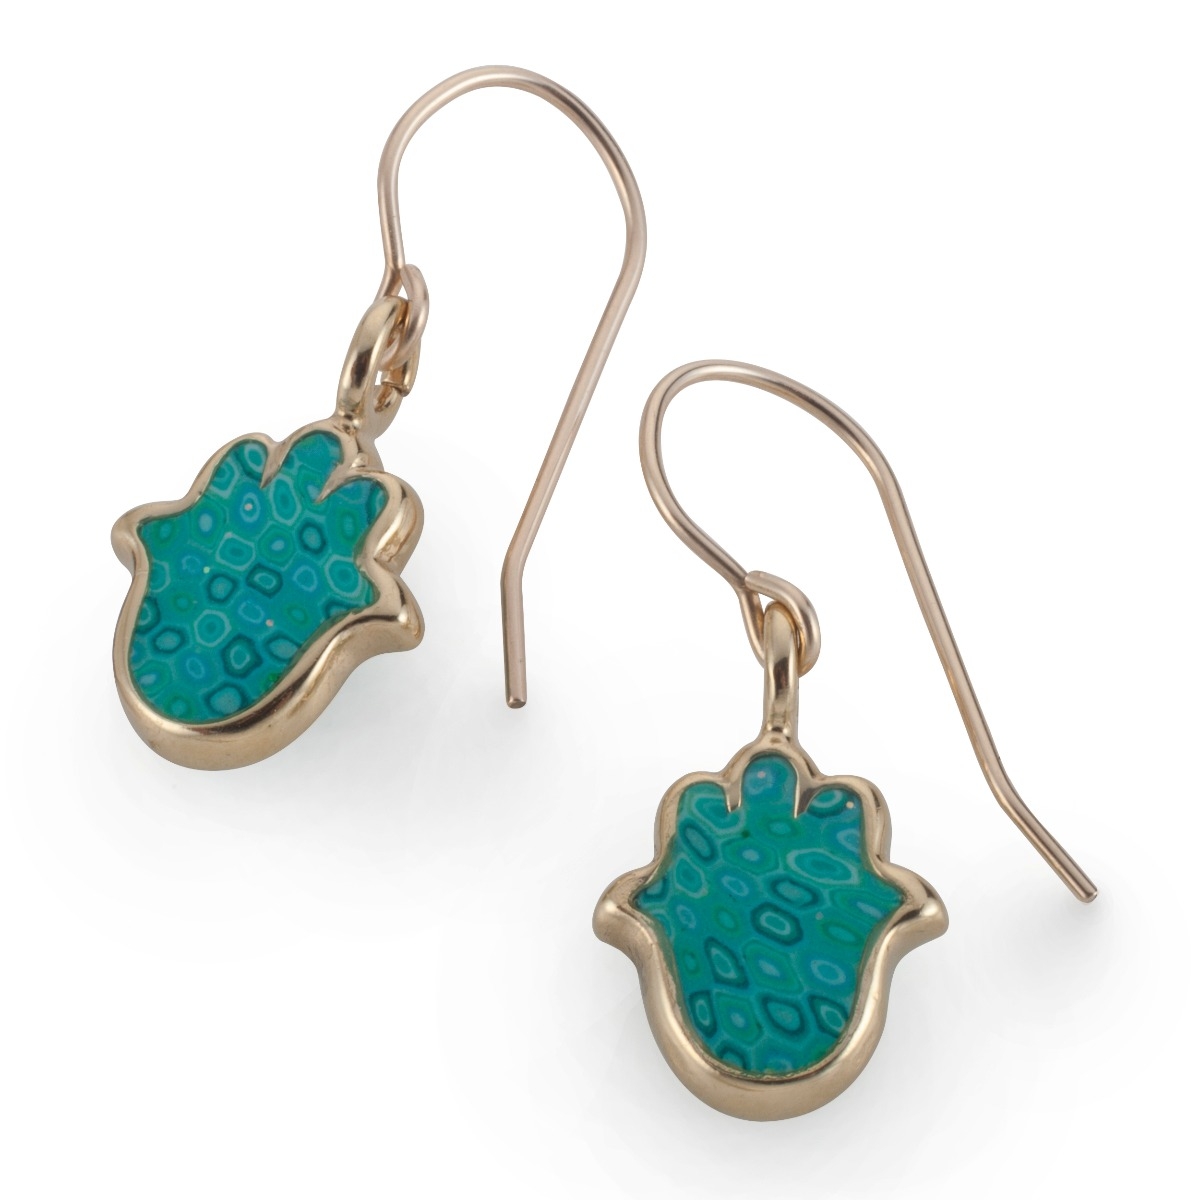 Adina Plastelina 24K Gold Plated Silver Hamsa Earrings – Turquoise  - 1